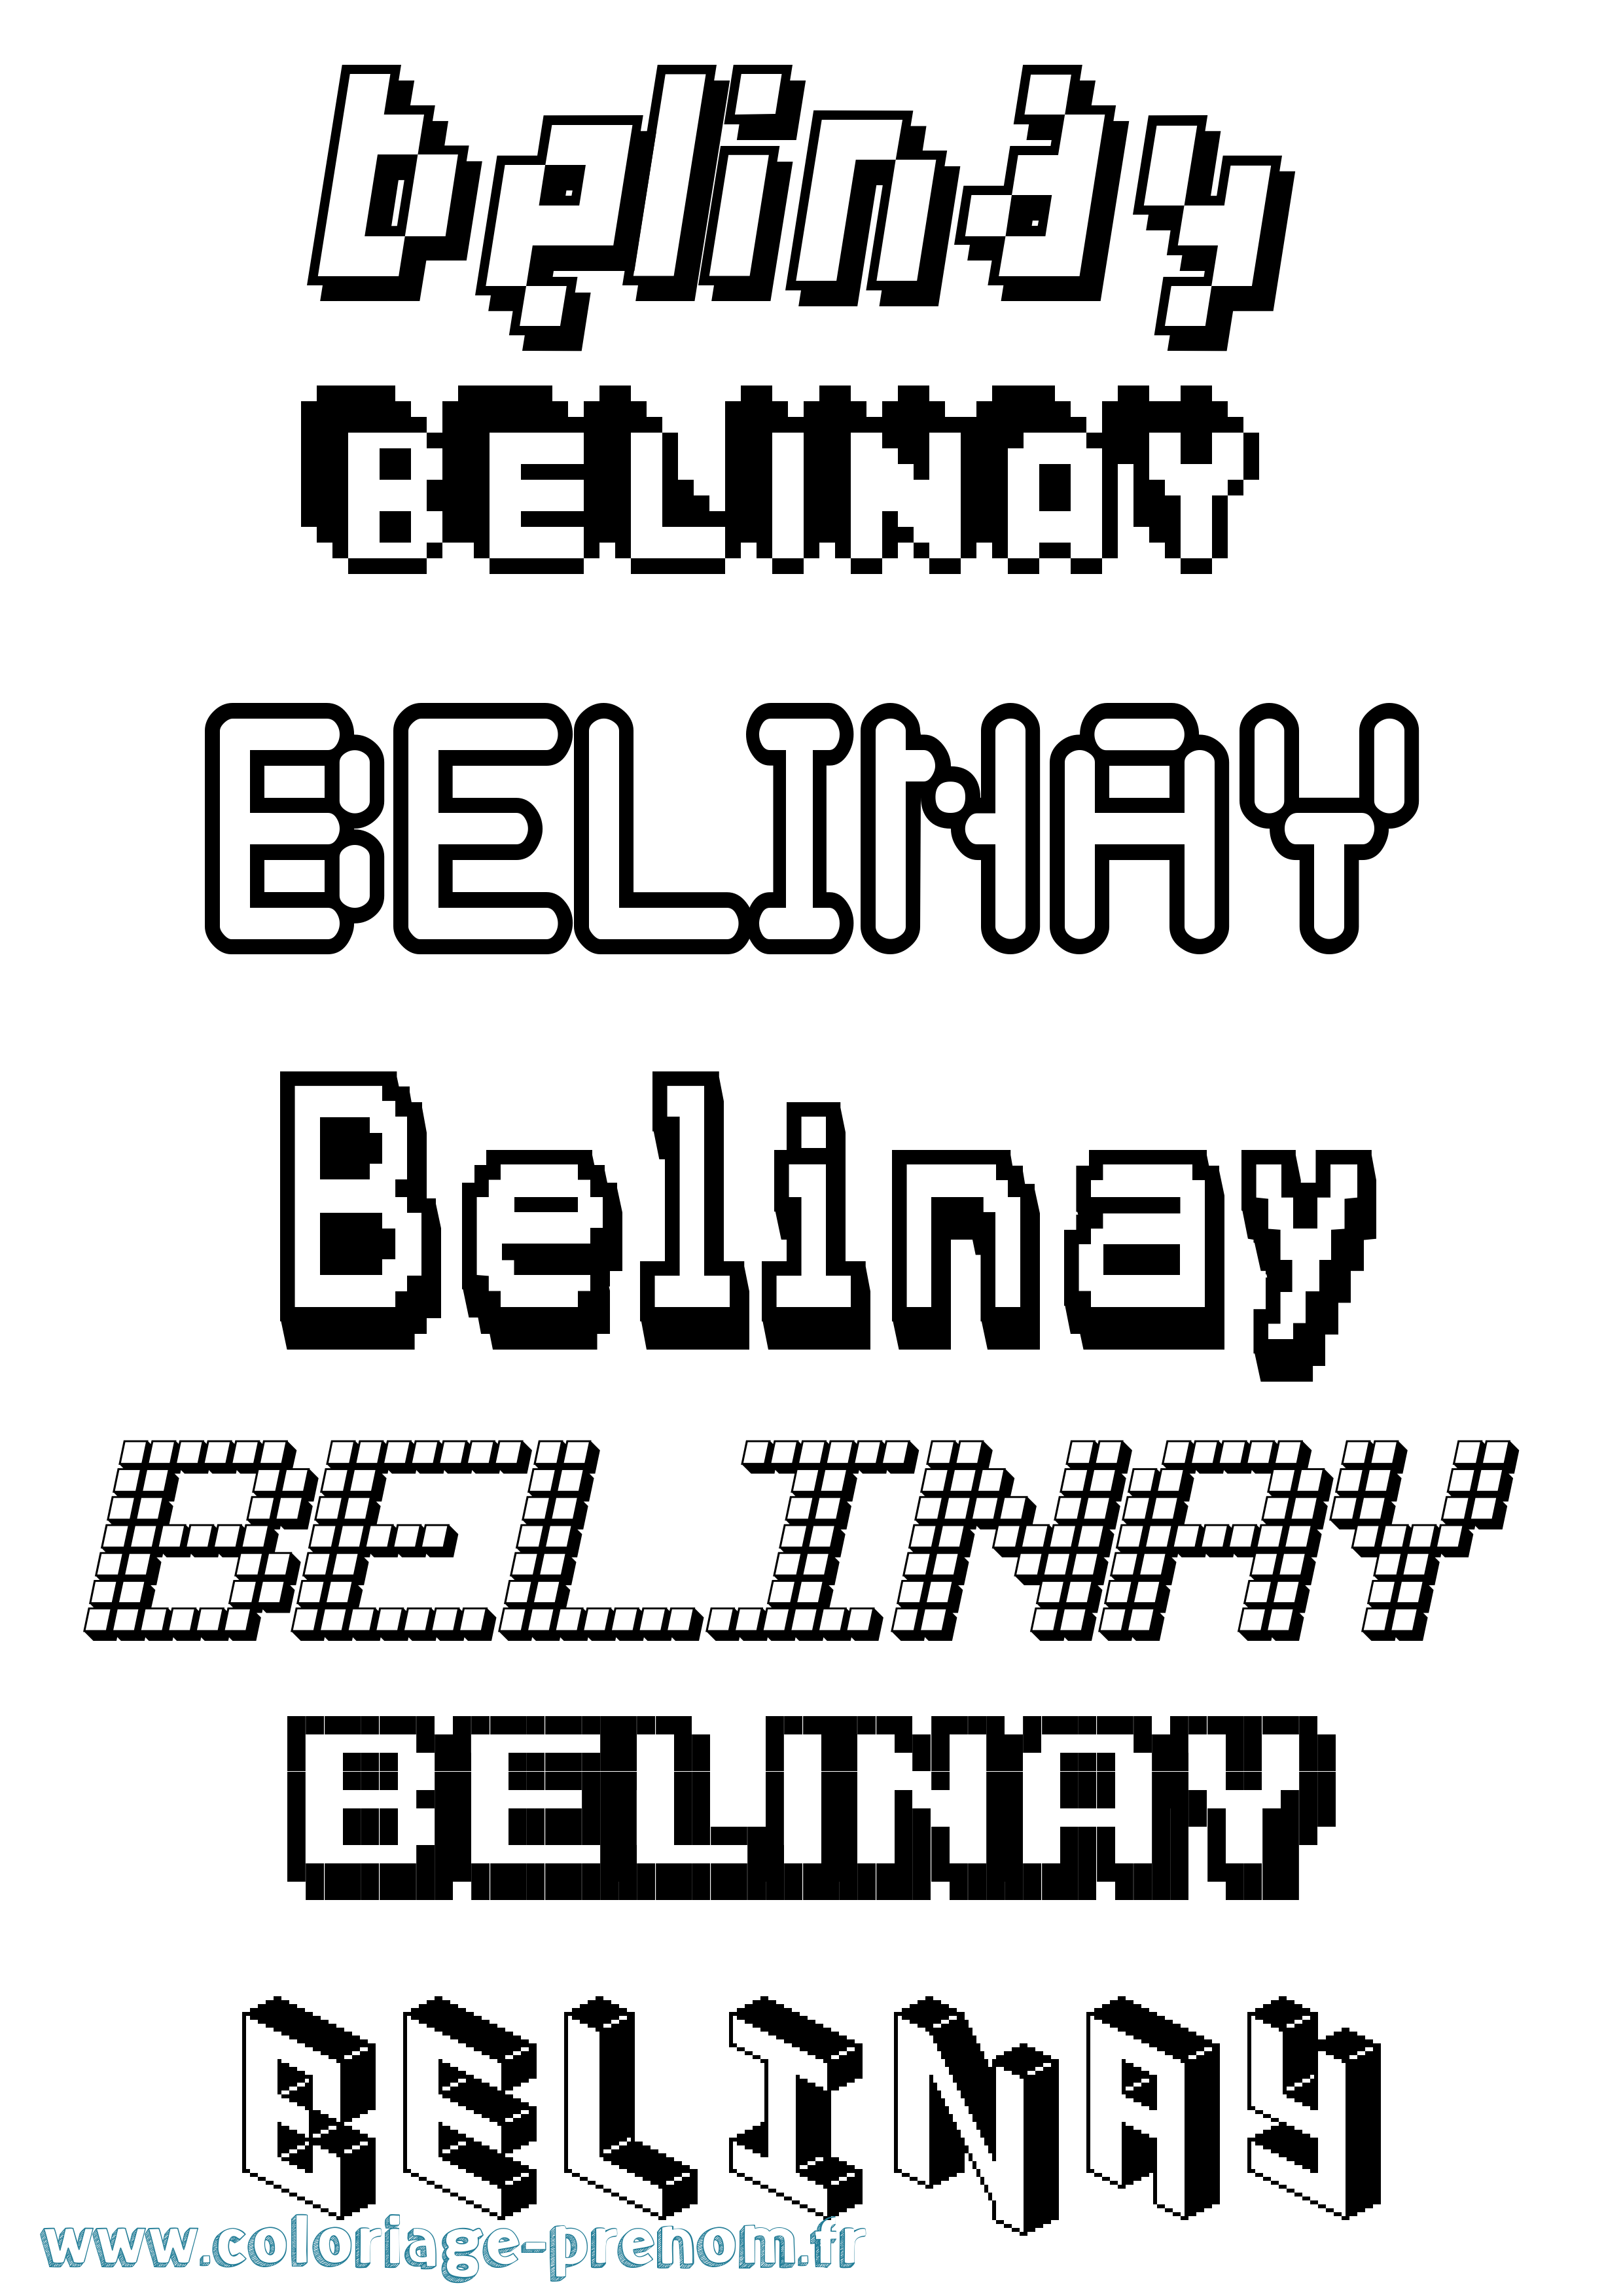 Coloriage prénom Belinay Pixel